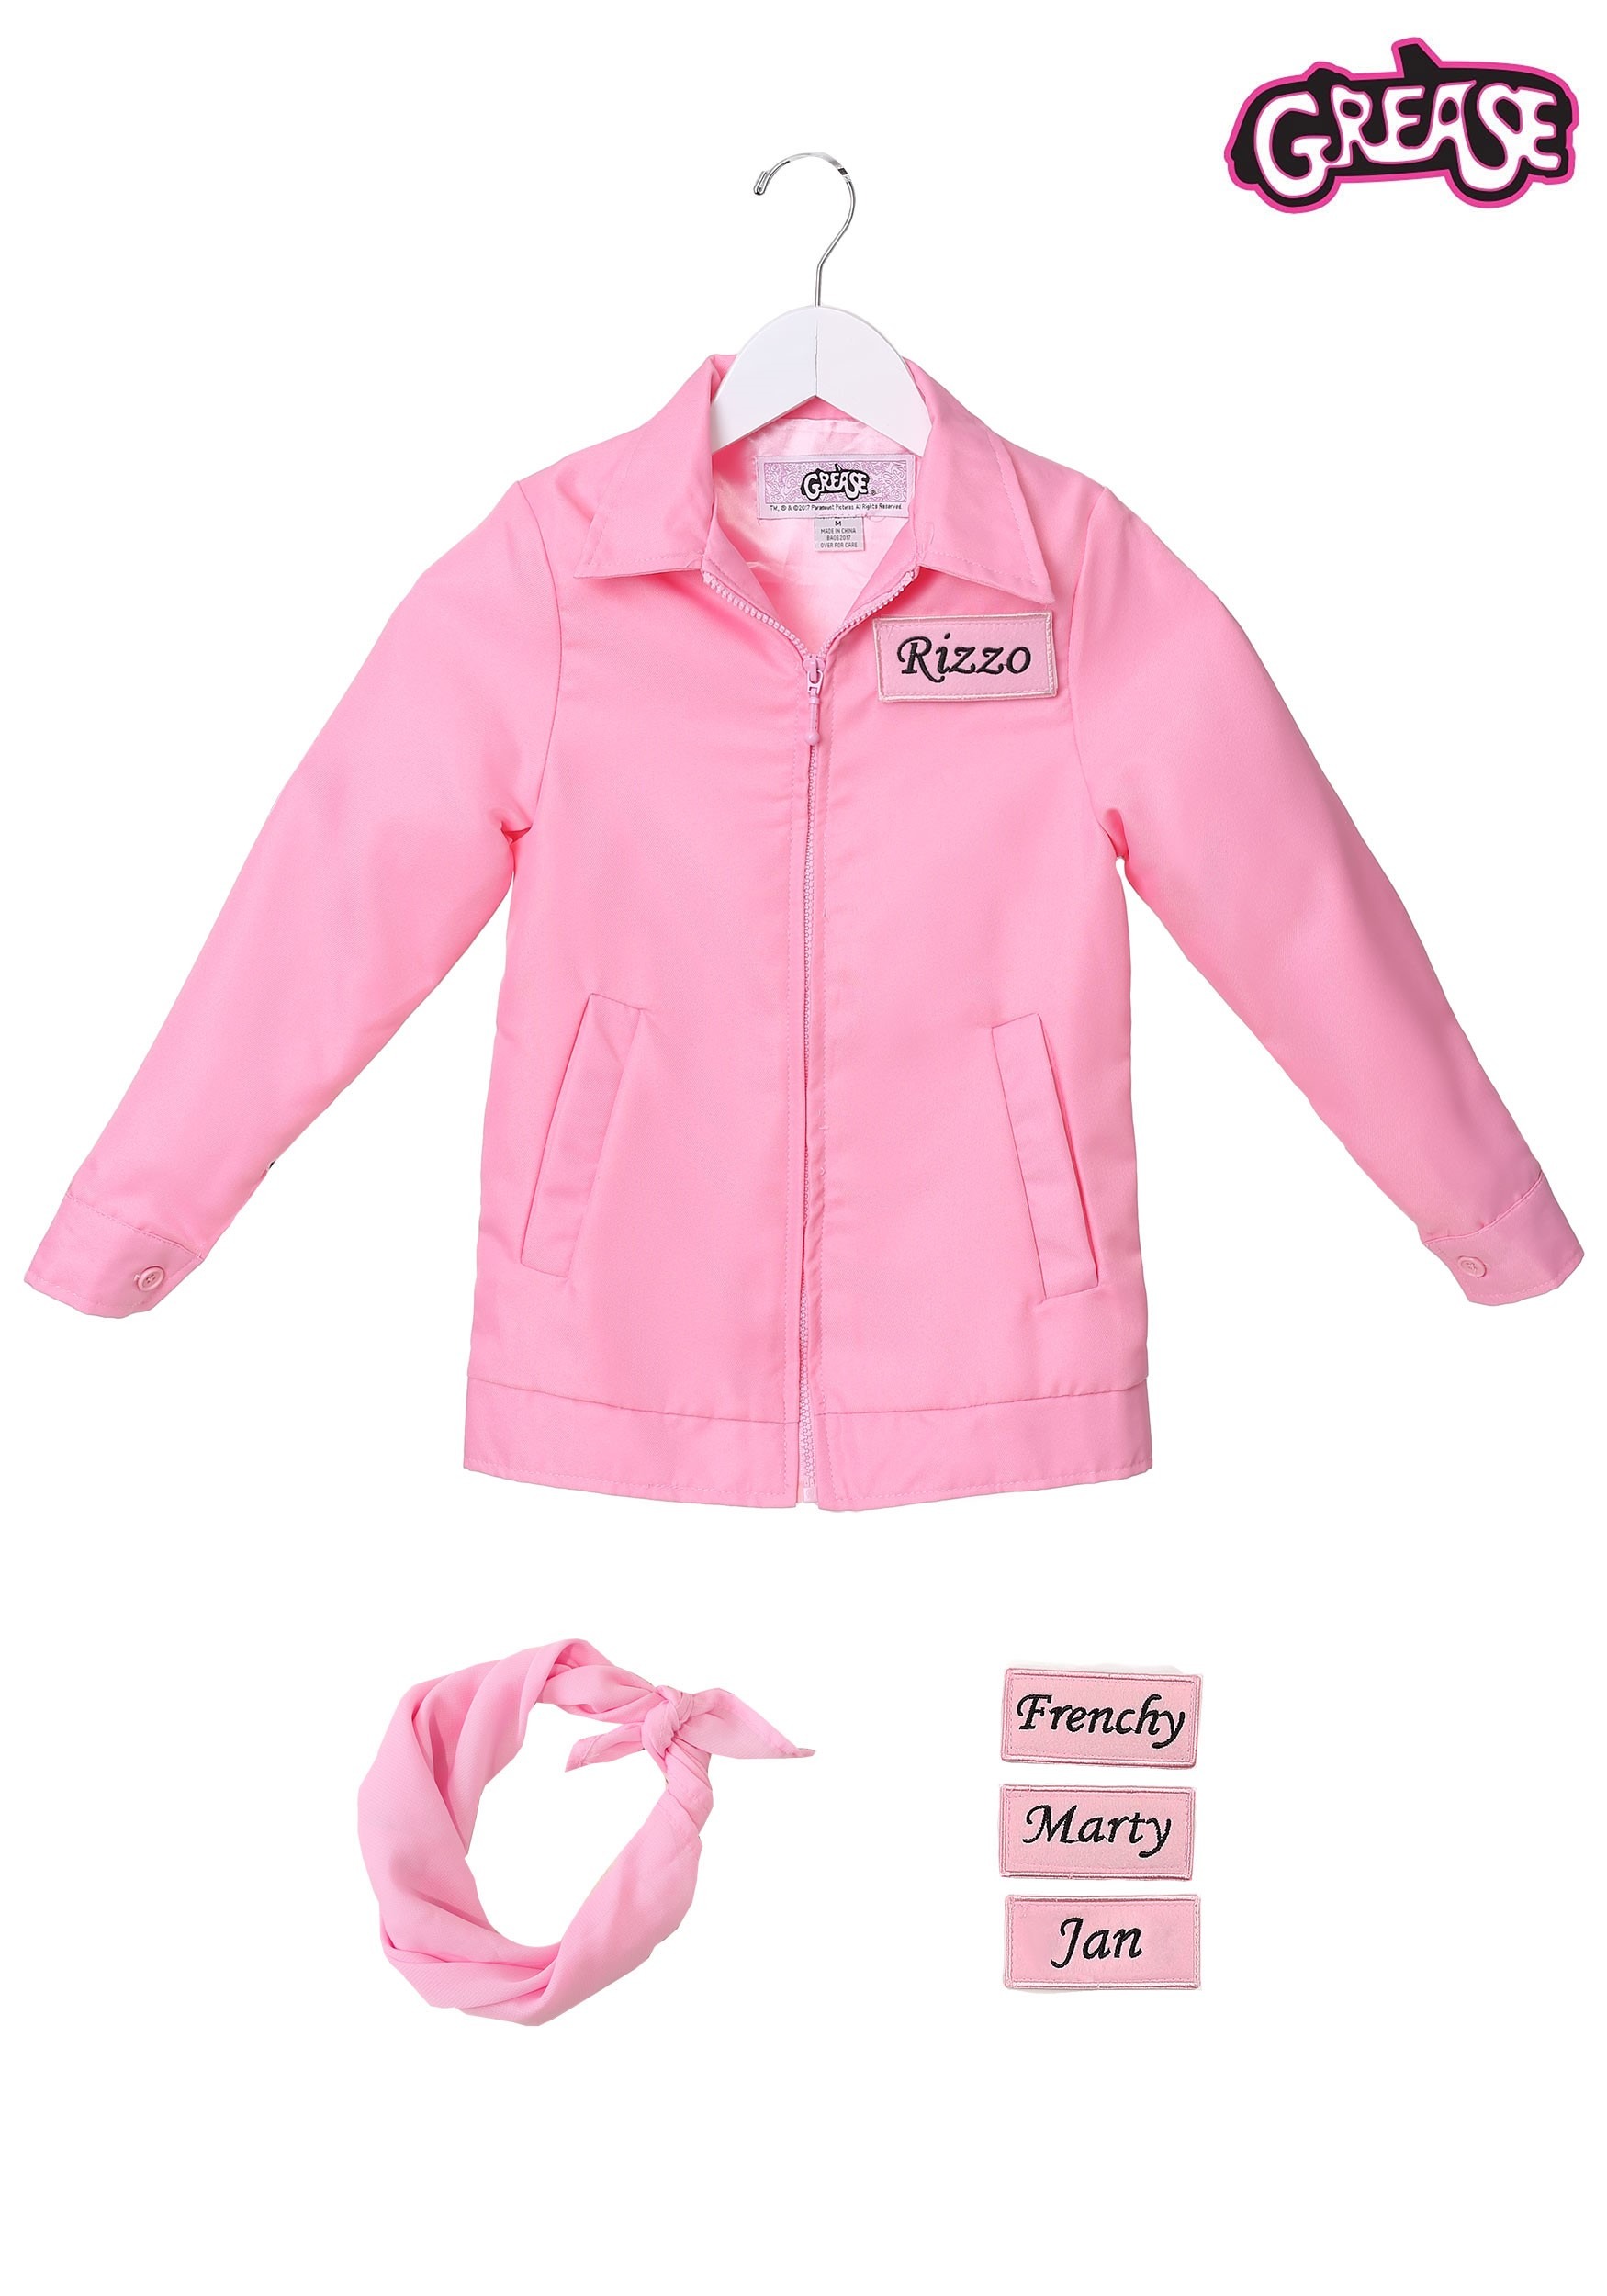 Child Authentic Pink Ladies Jacket Costume